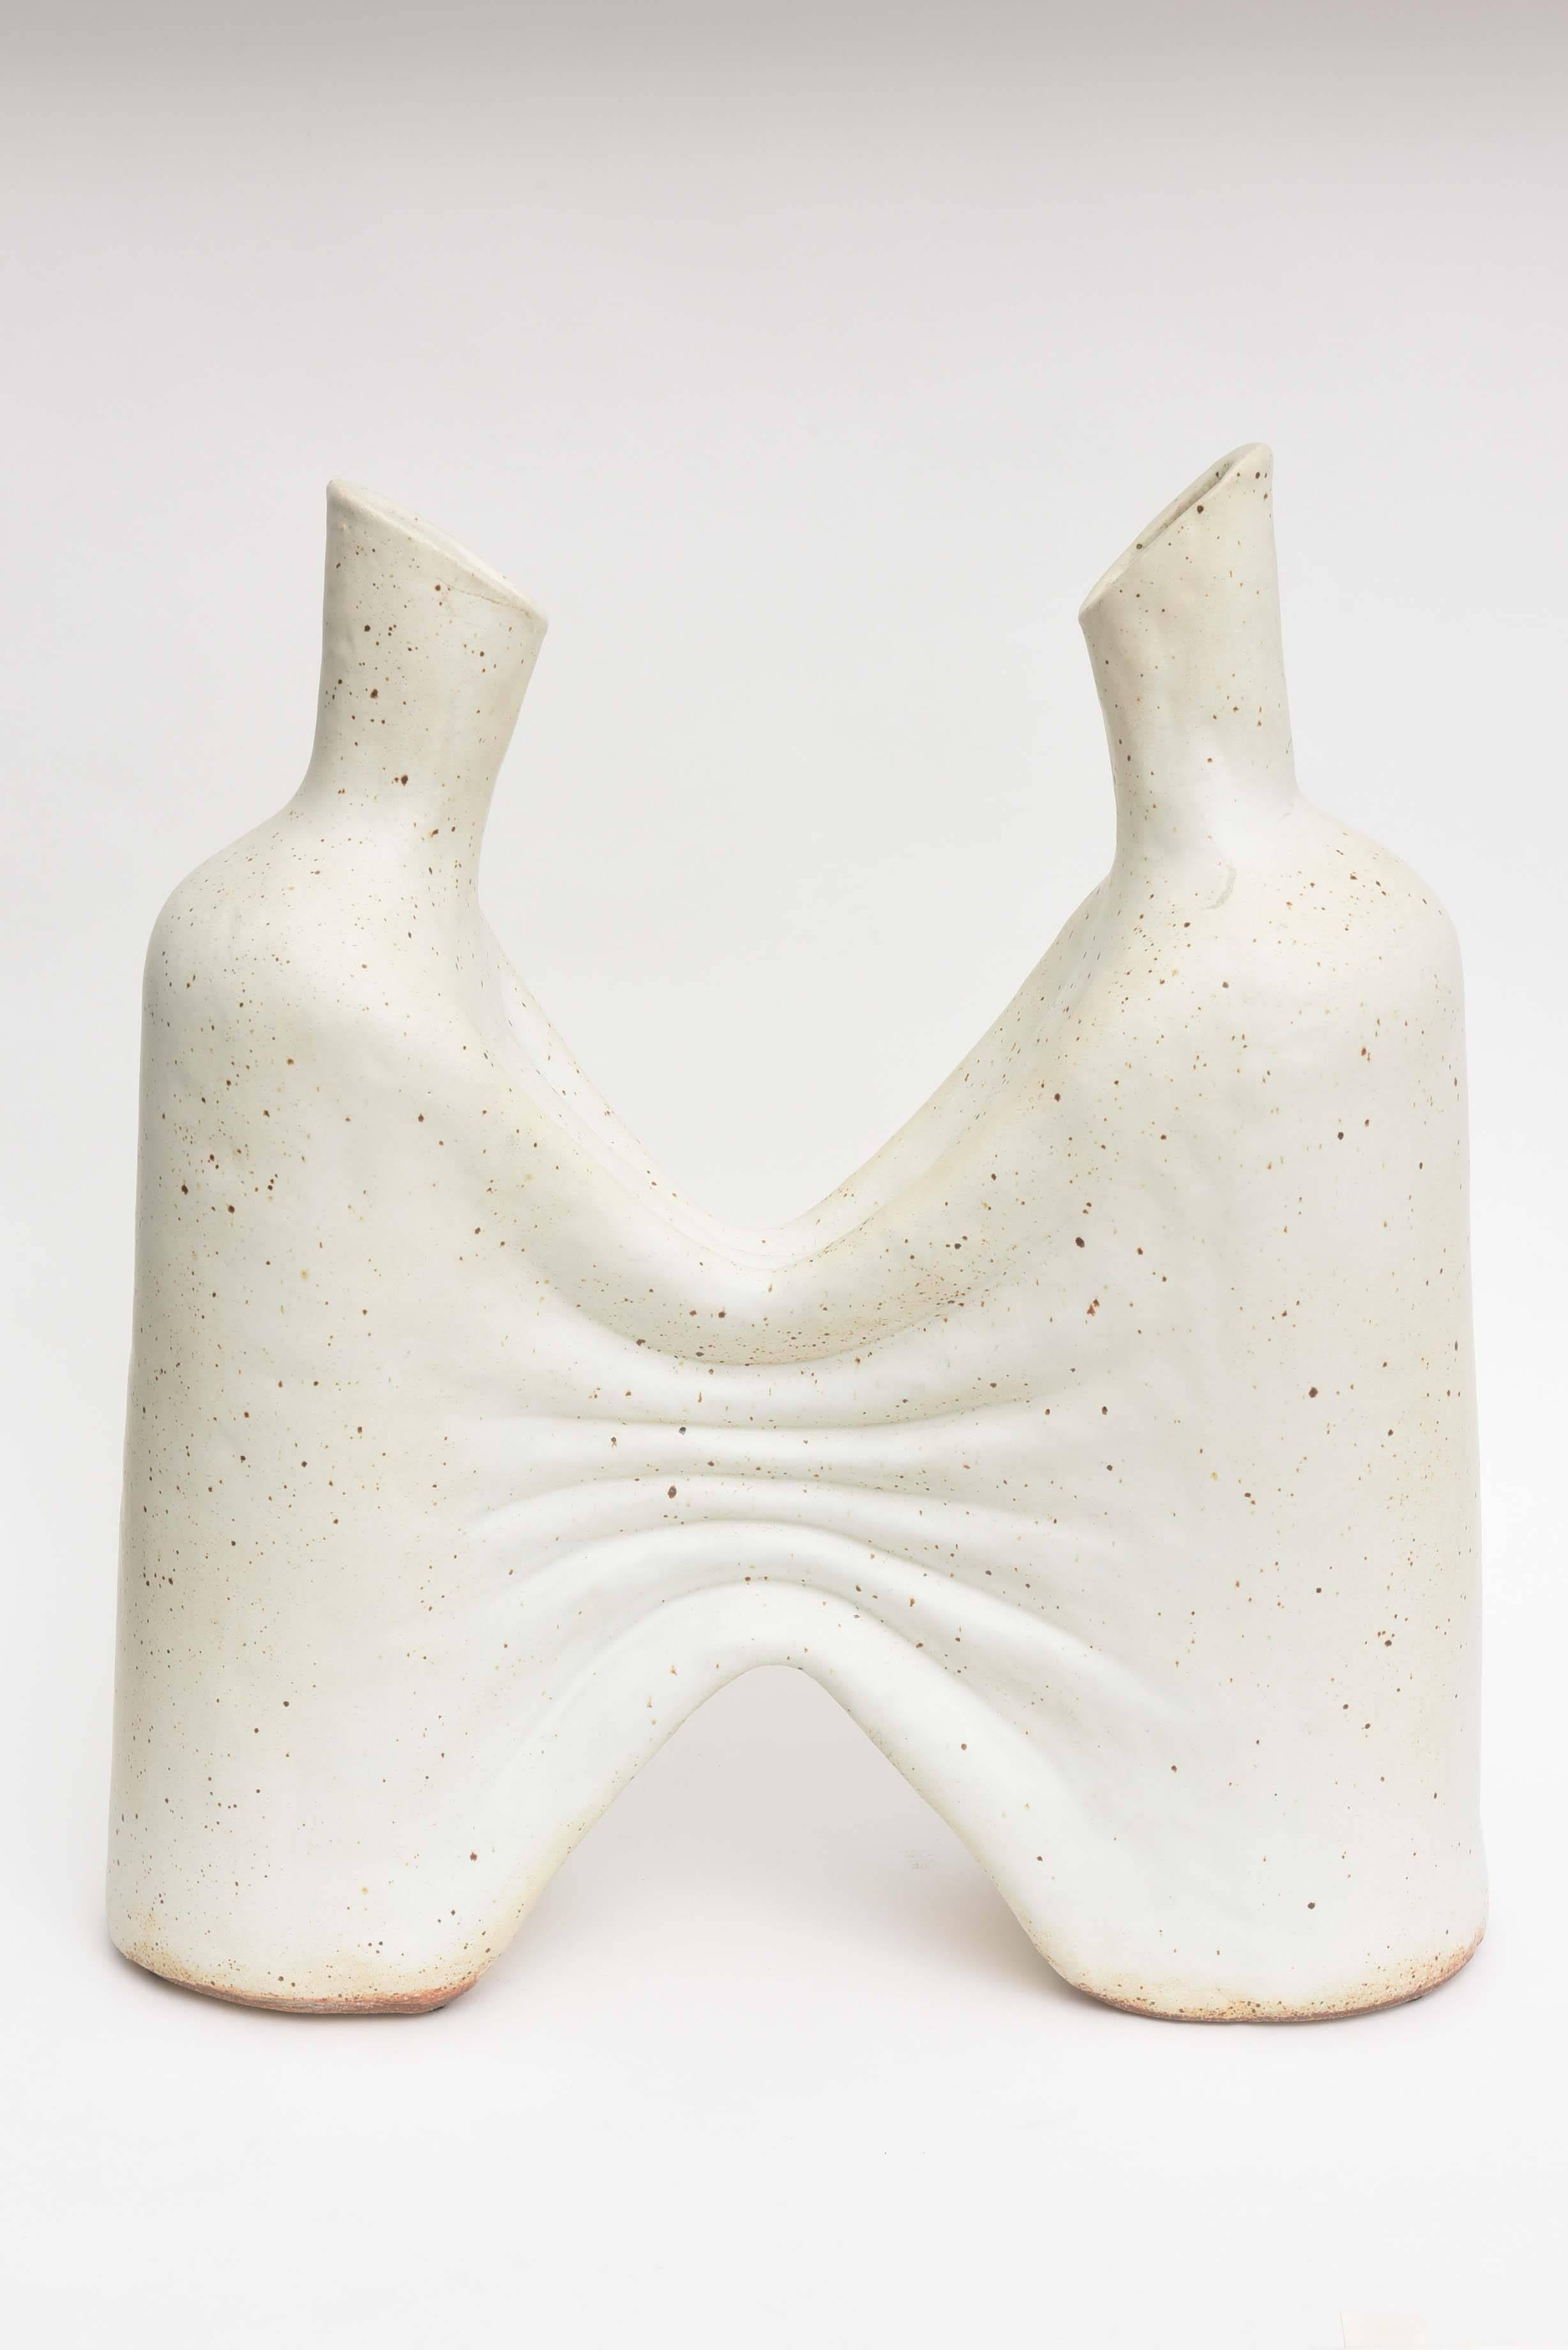 Ceramic vase/ sculpture of sculptural form by renowned California artist Daric Harvie.